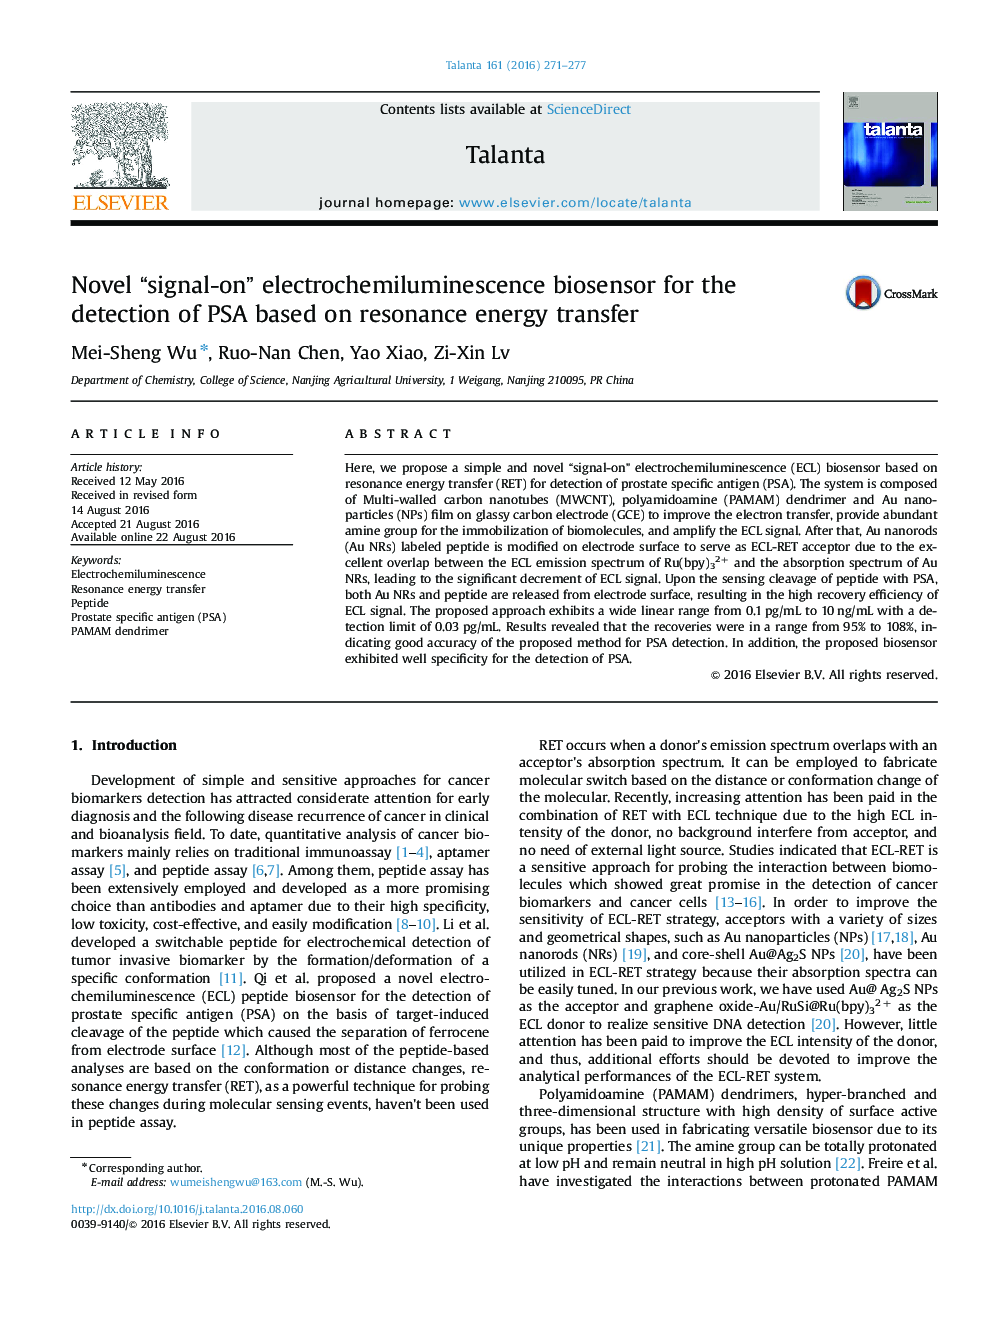 Novel “signal-on” electrochemiluminescence biosensor for the detection of PSA based on resonance energy transfer